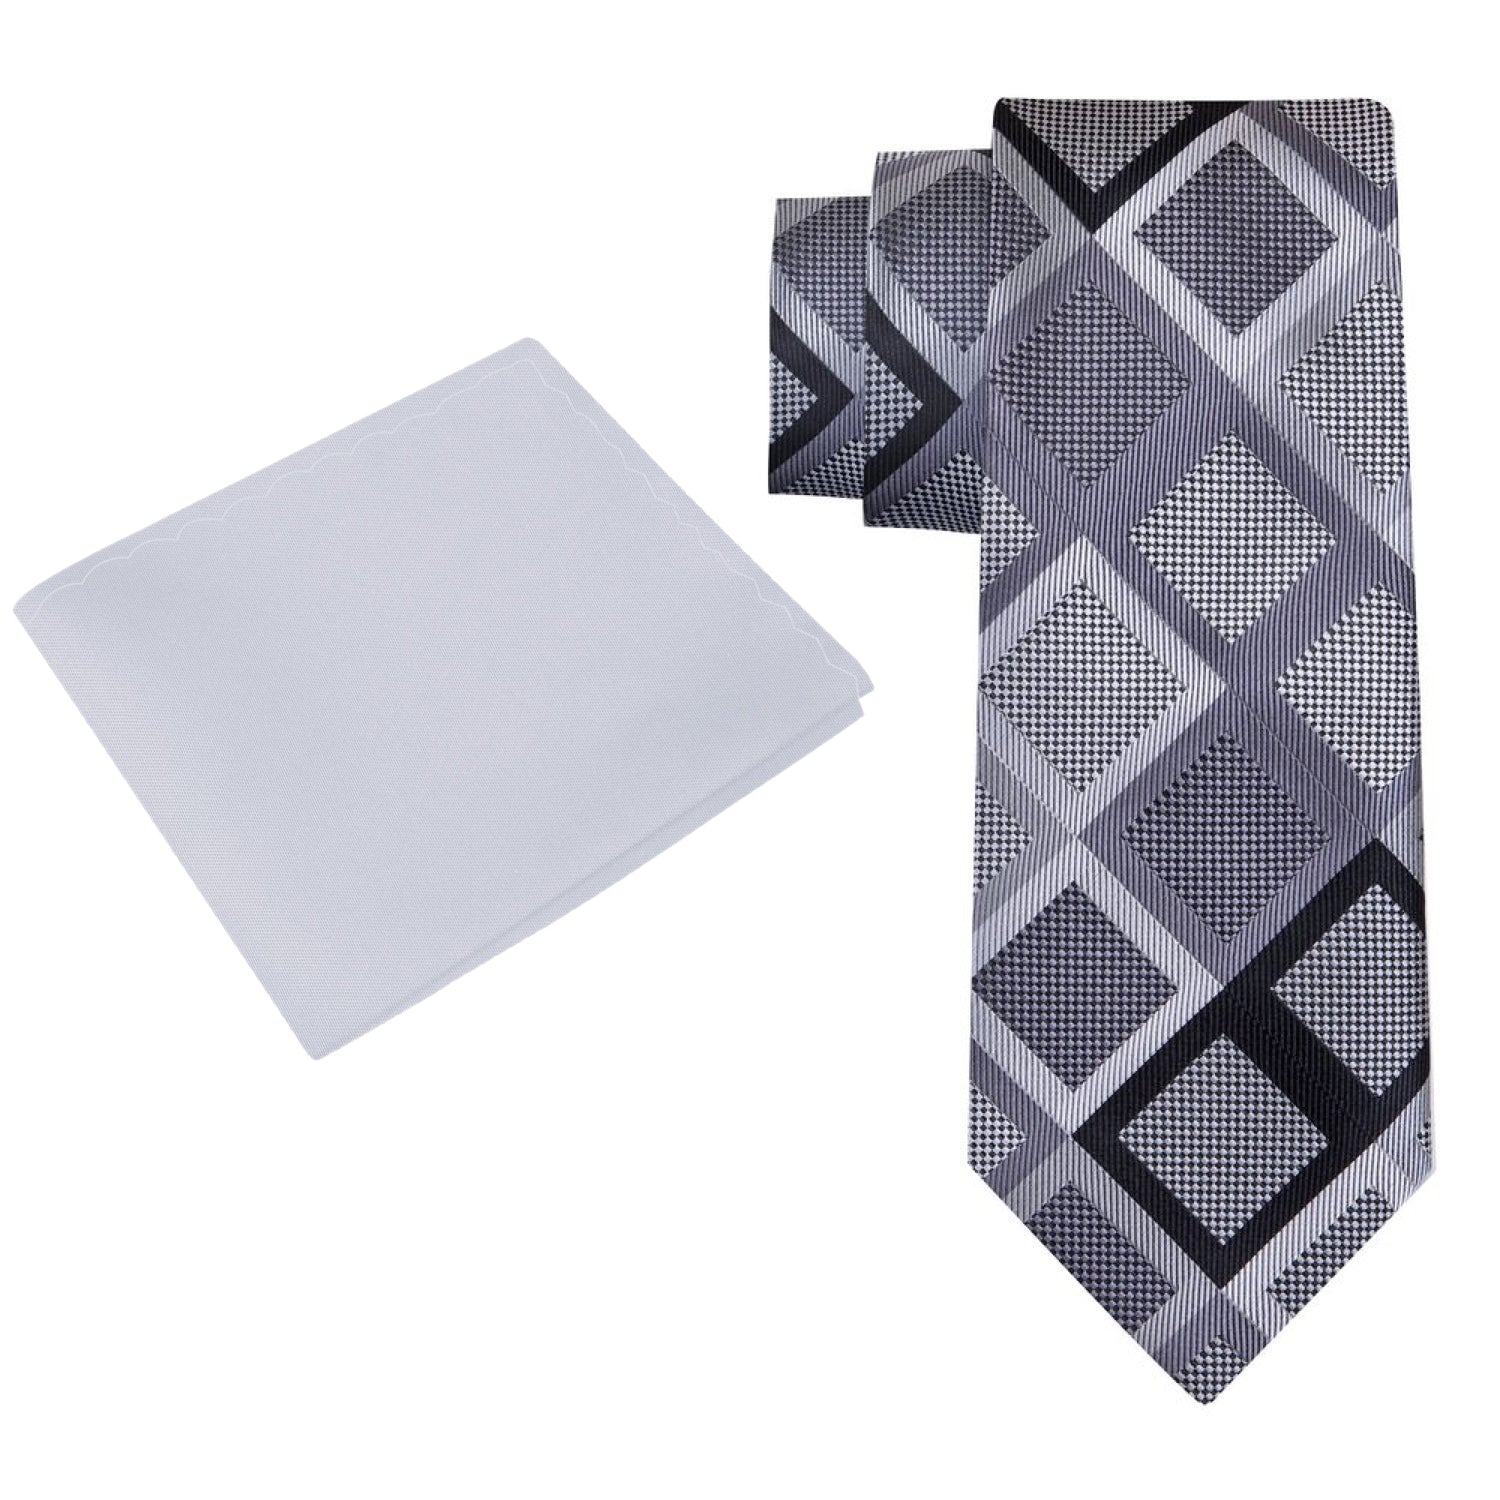 Alt View: Grey Black Geometric King Tut Diamonds Tie and Grey Square 